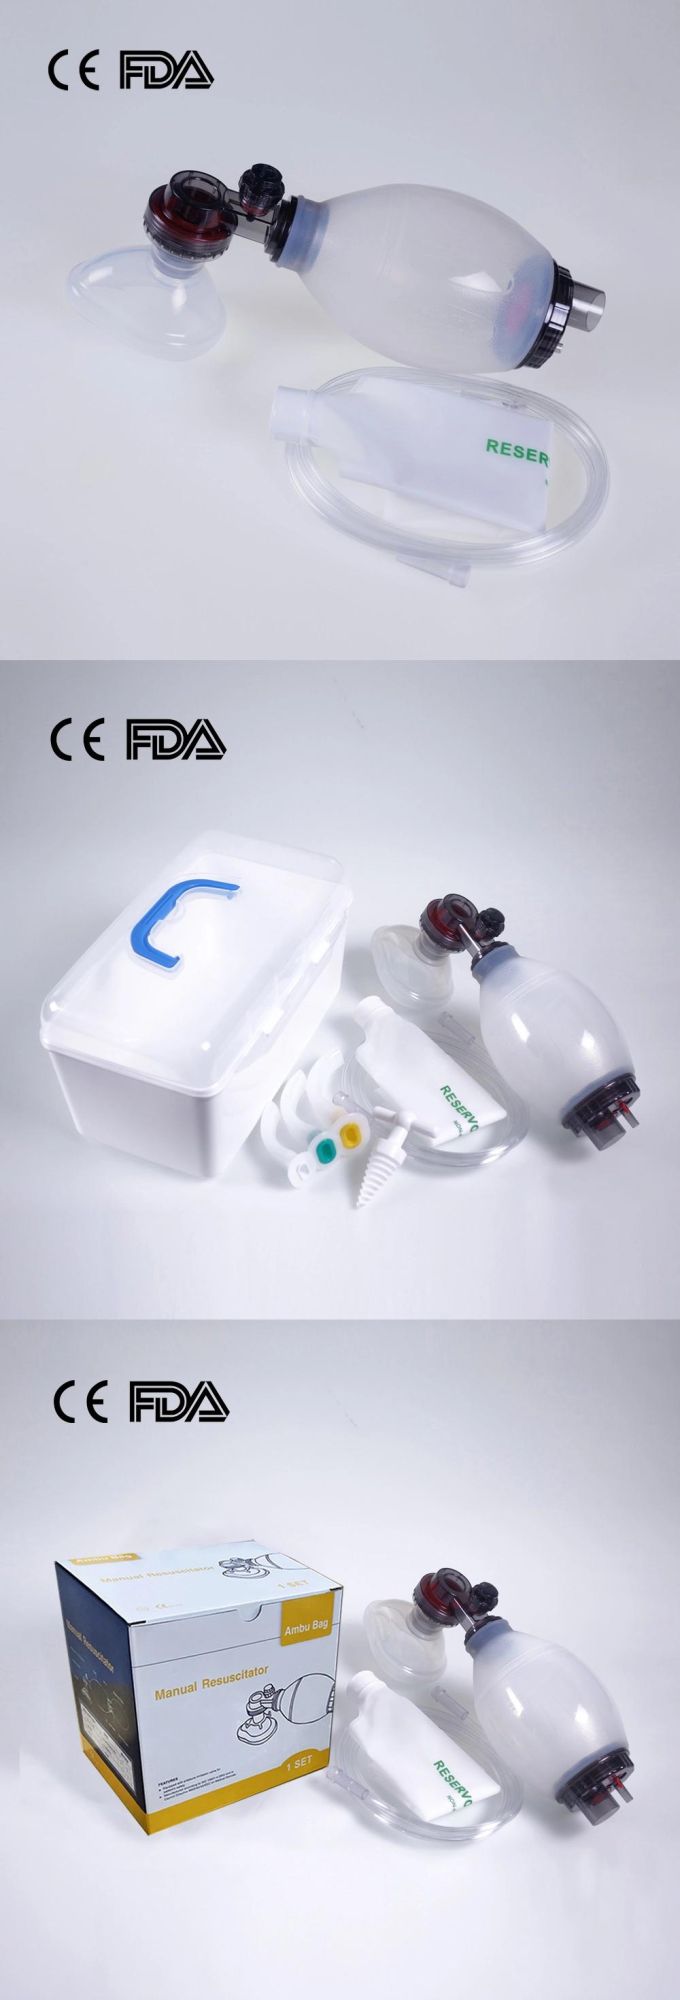 Reusable Silicone Ambu Bag Manual Resuscitator Factory with CE, FDA for Adult Pediatric Children Kids Size